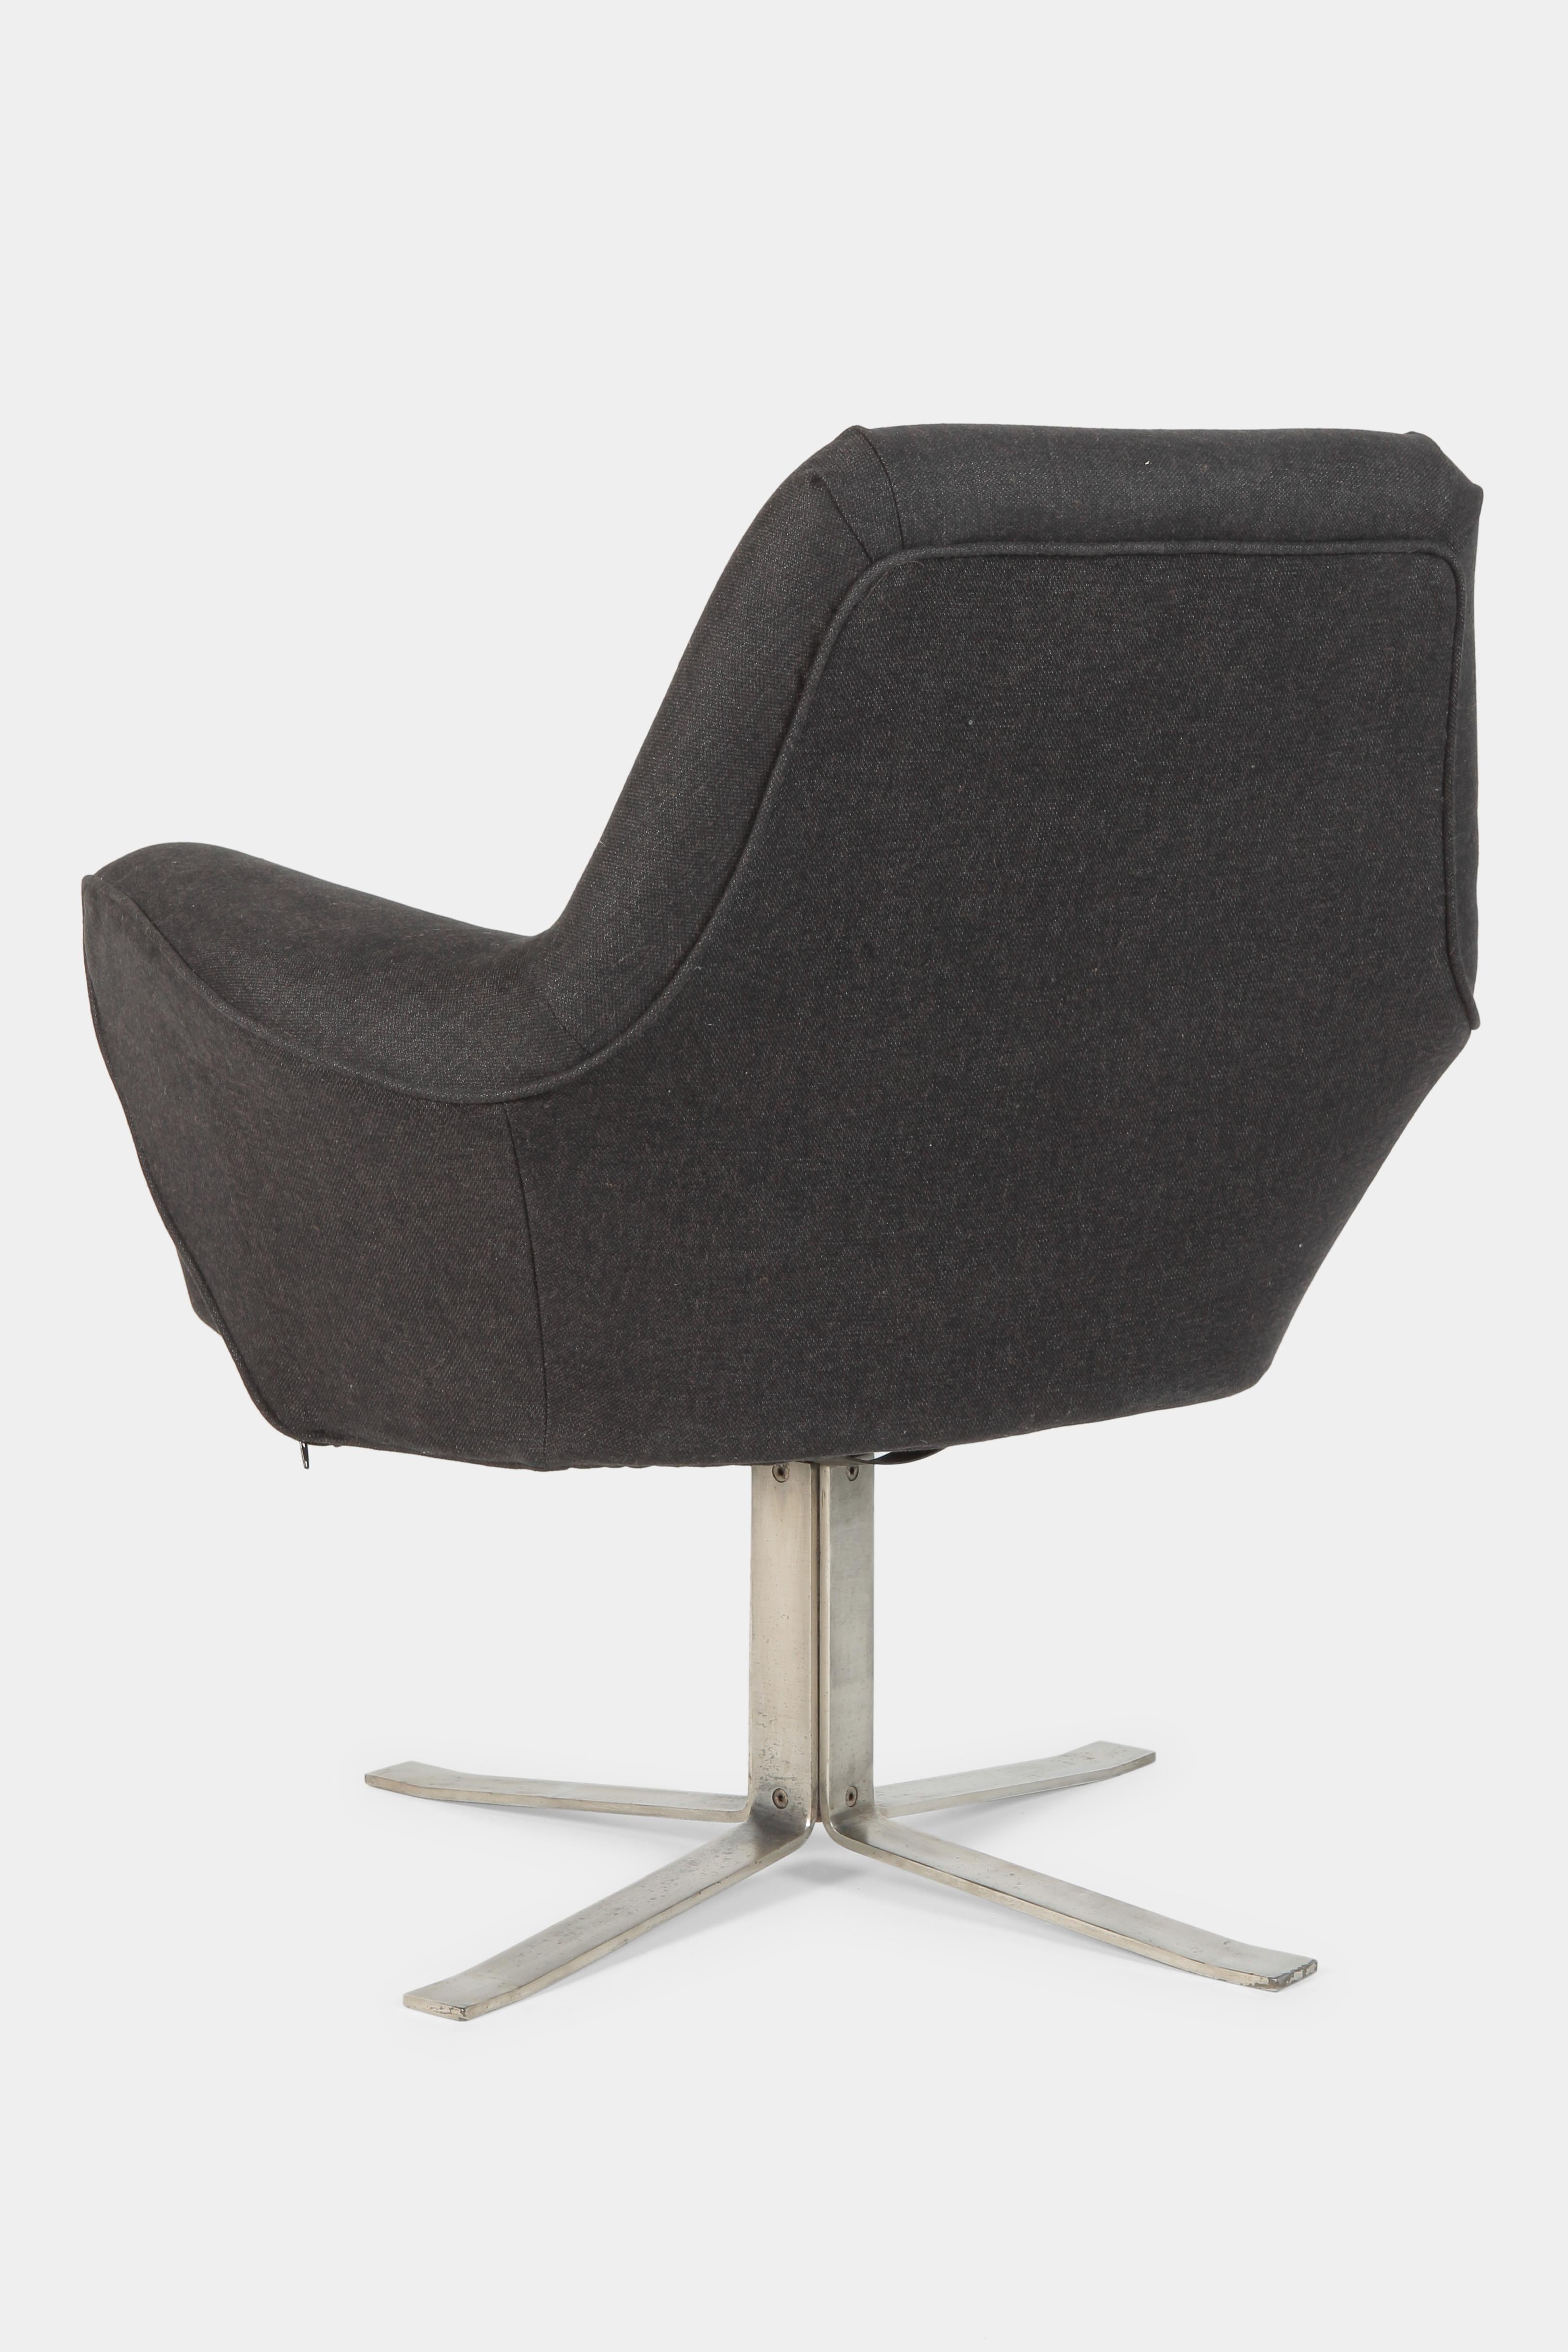 Italian Giulio Moscatelli “Dolly” Lounge Chair Forma Nova, 1960s For Sale